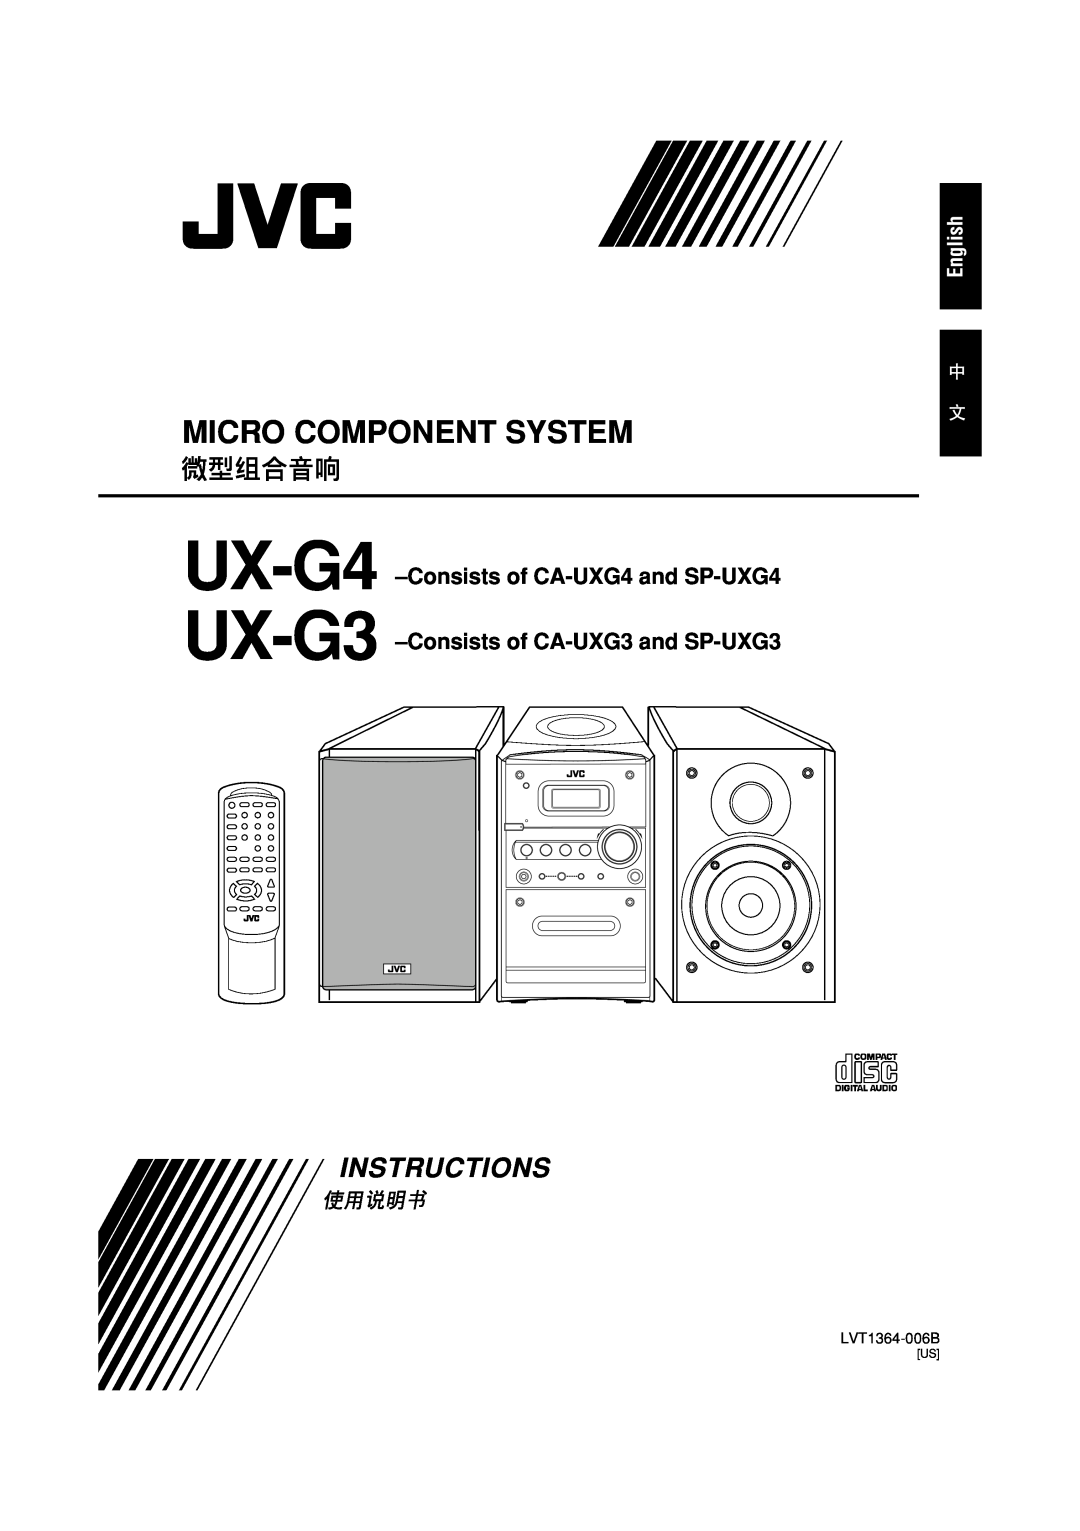 JVC LVT1364-006B manual UX-G4 UX-G3, Micro Component System, Instructions, Consistsof CA-UXG4and SP-UXG4, English 